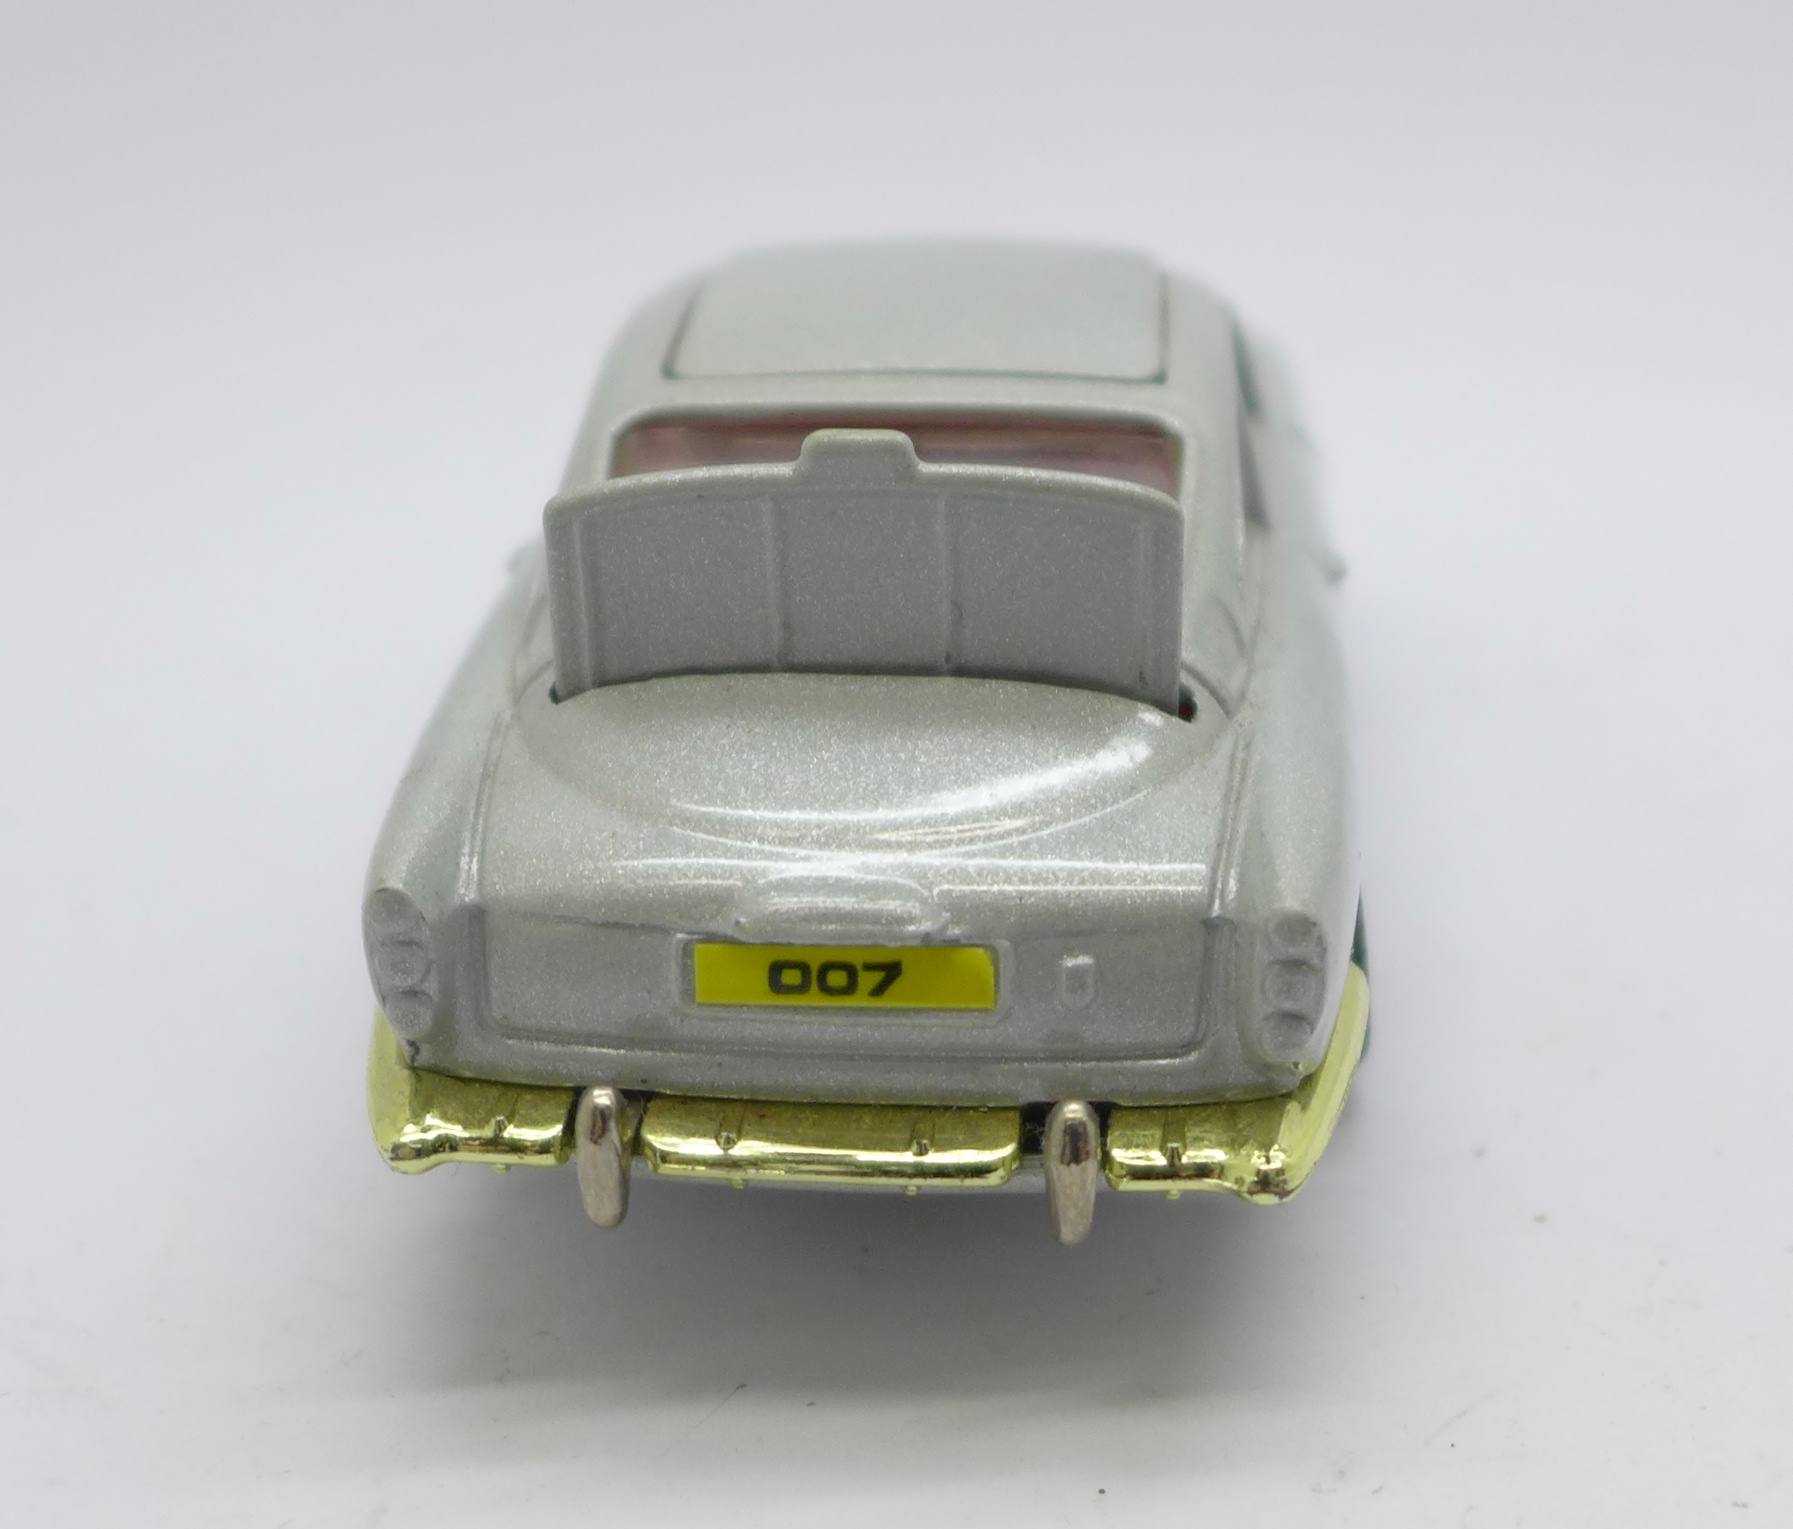 A Corgi Toys Aston Martin DB5 007 model vehicle - Image 3 of 4